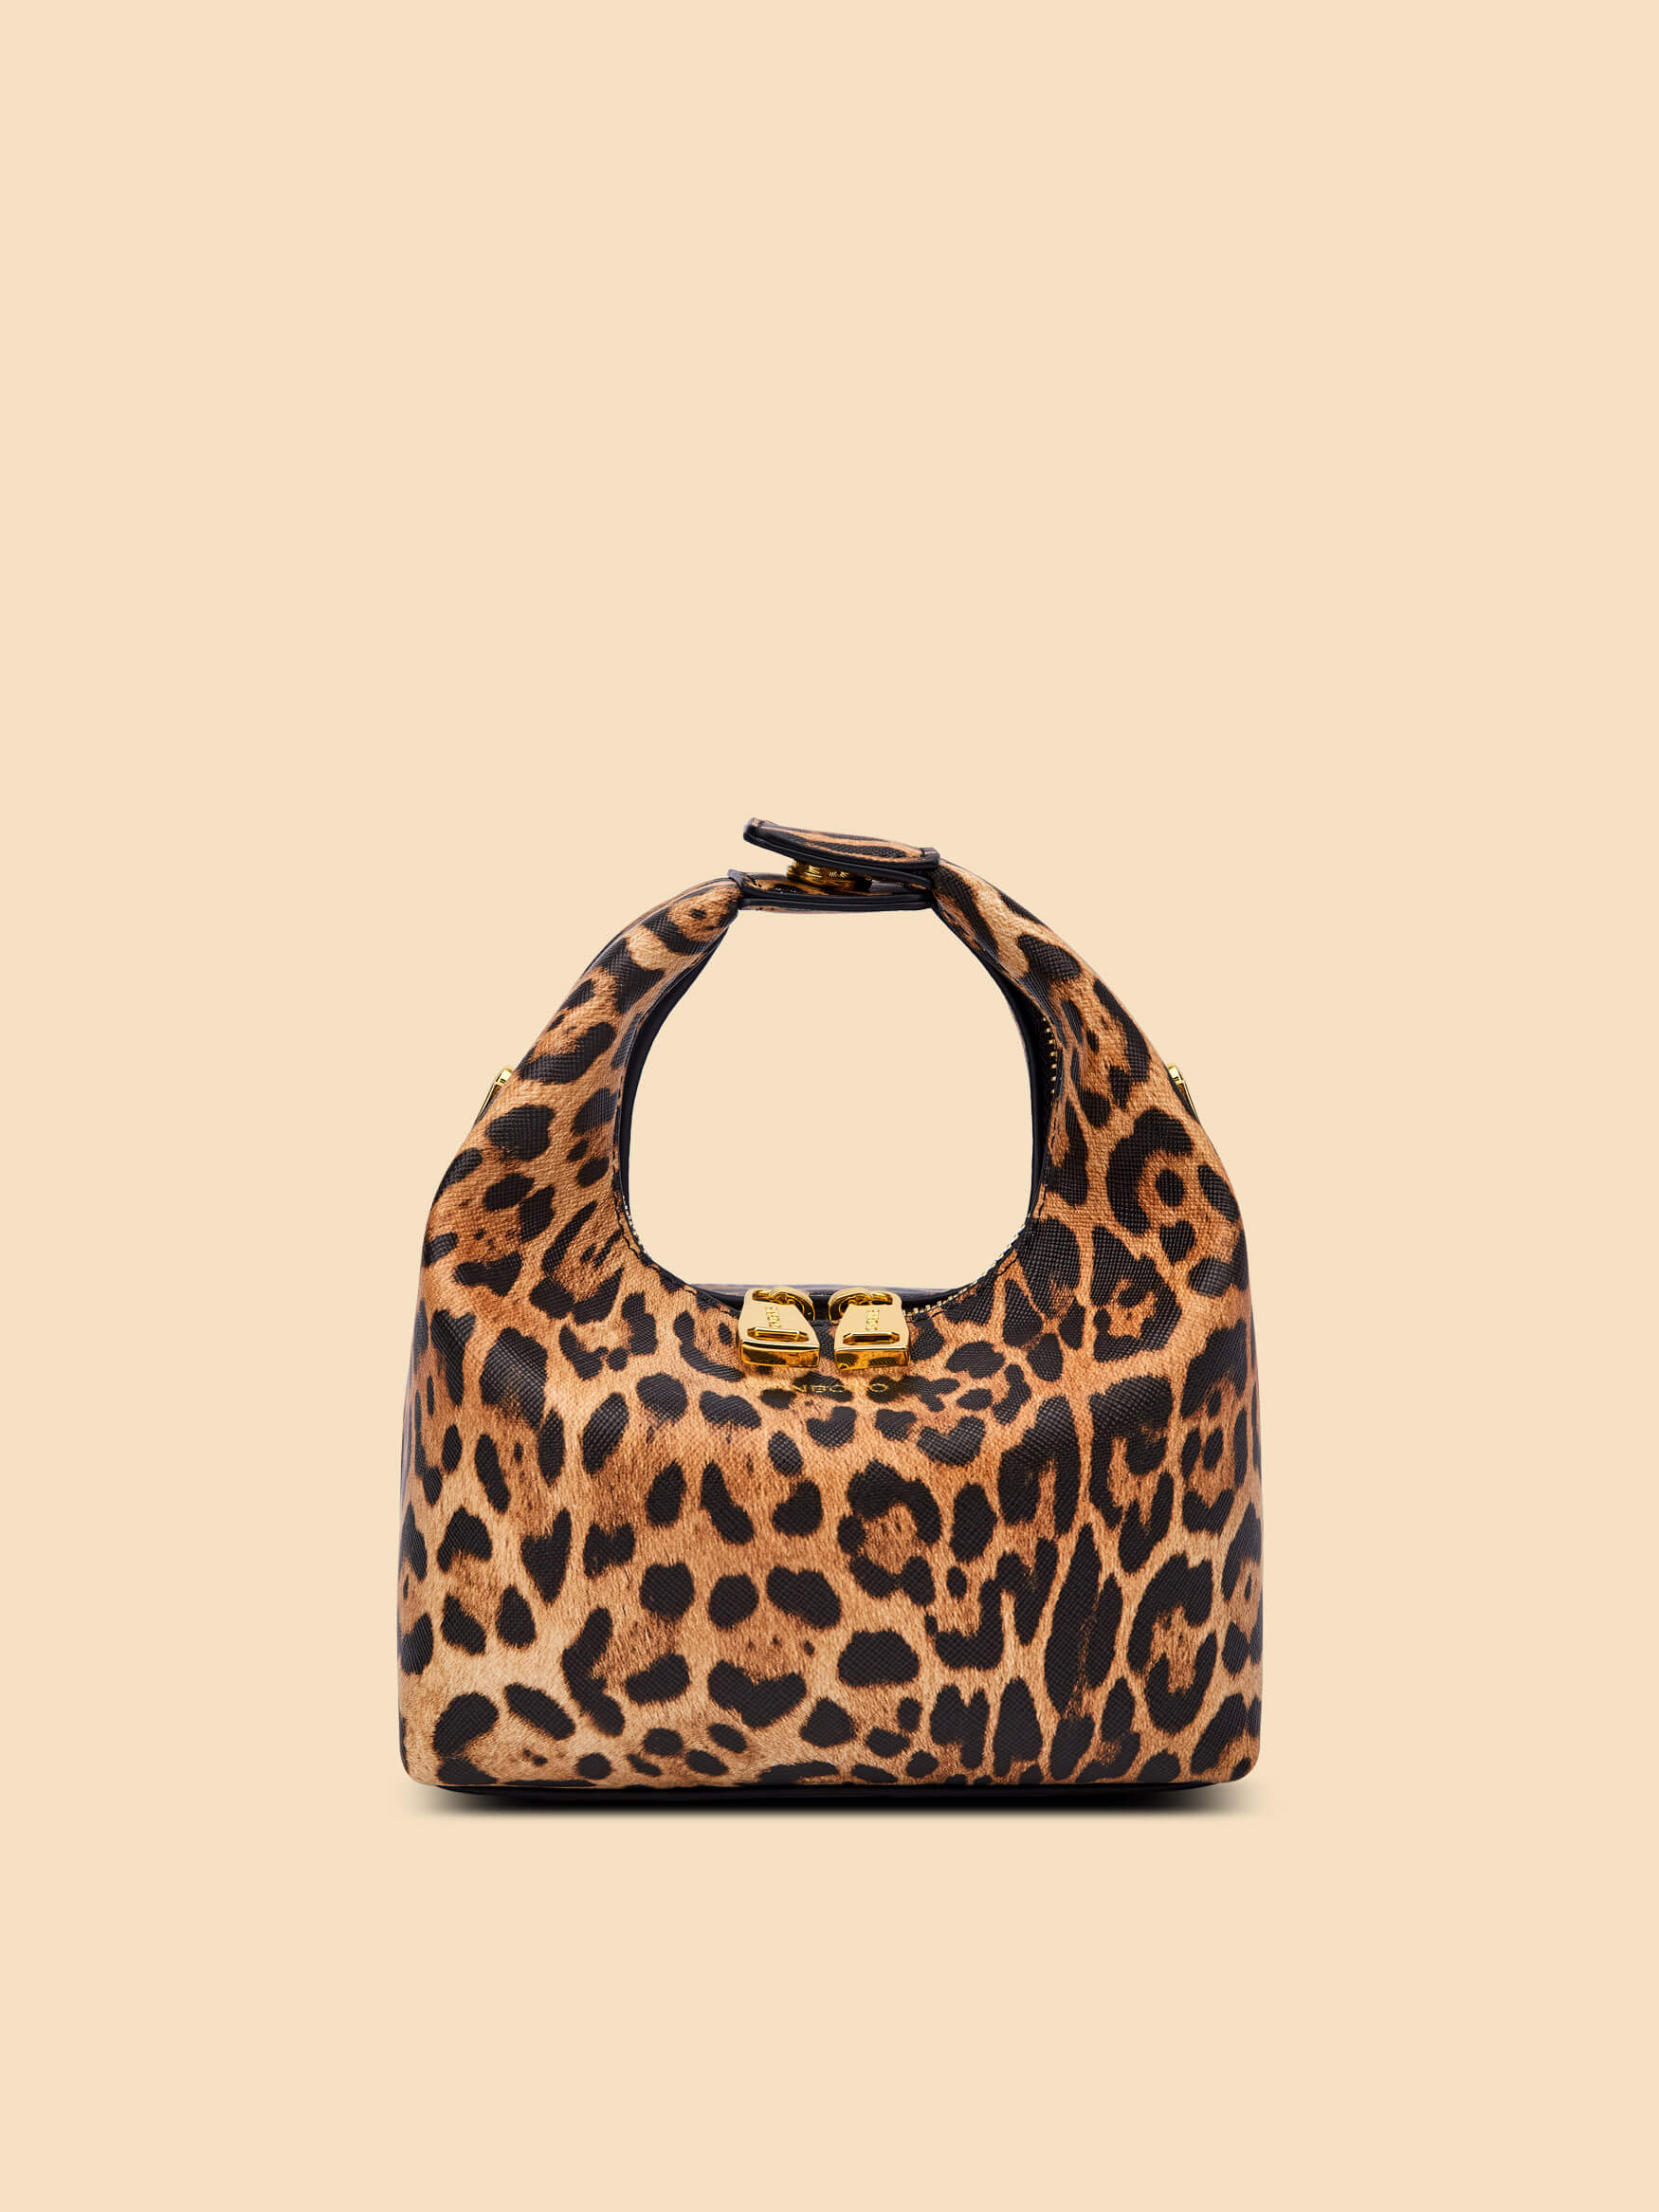 SINBONO Vienna Brown leopard print Leather Handbags -Vegan Leather Women Bag